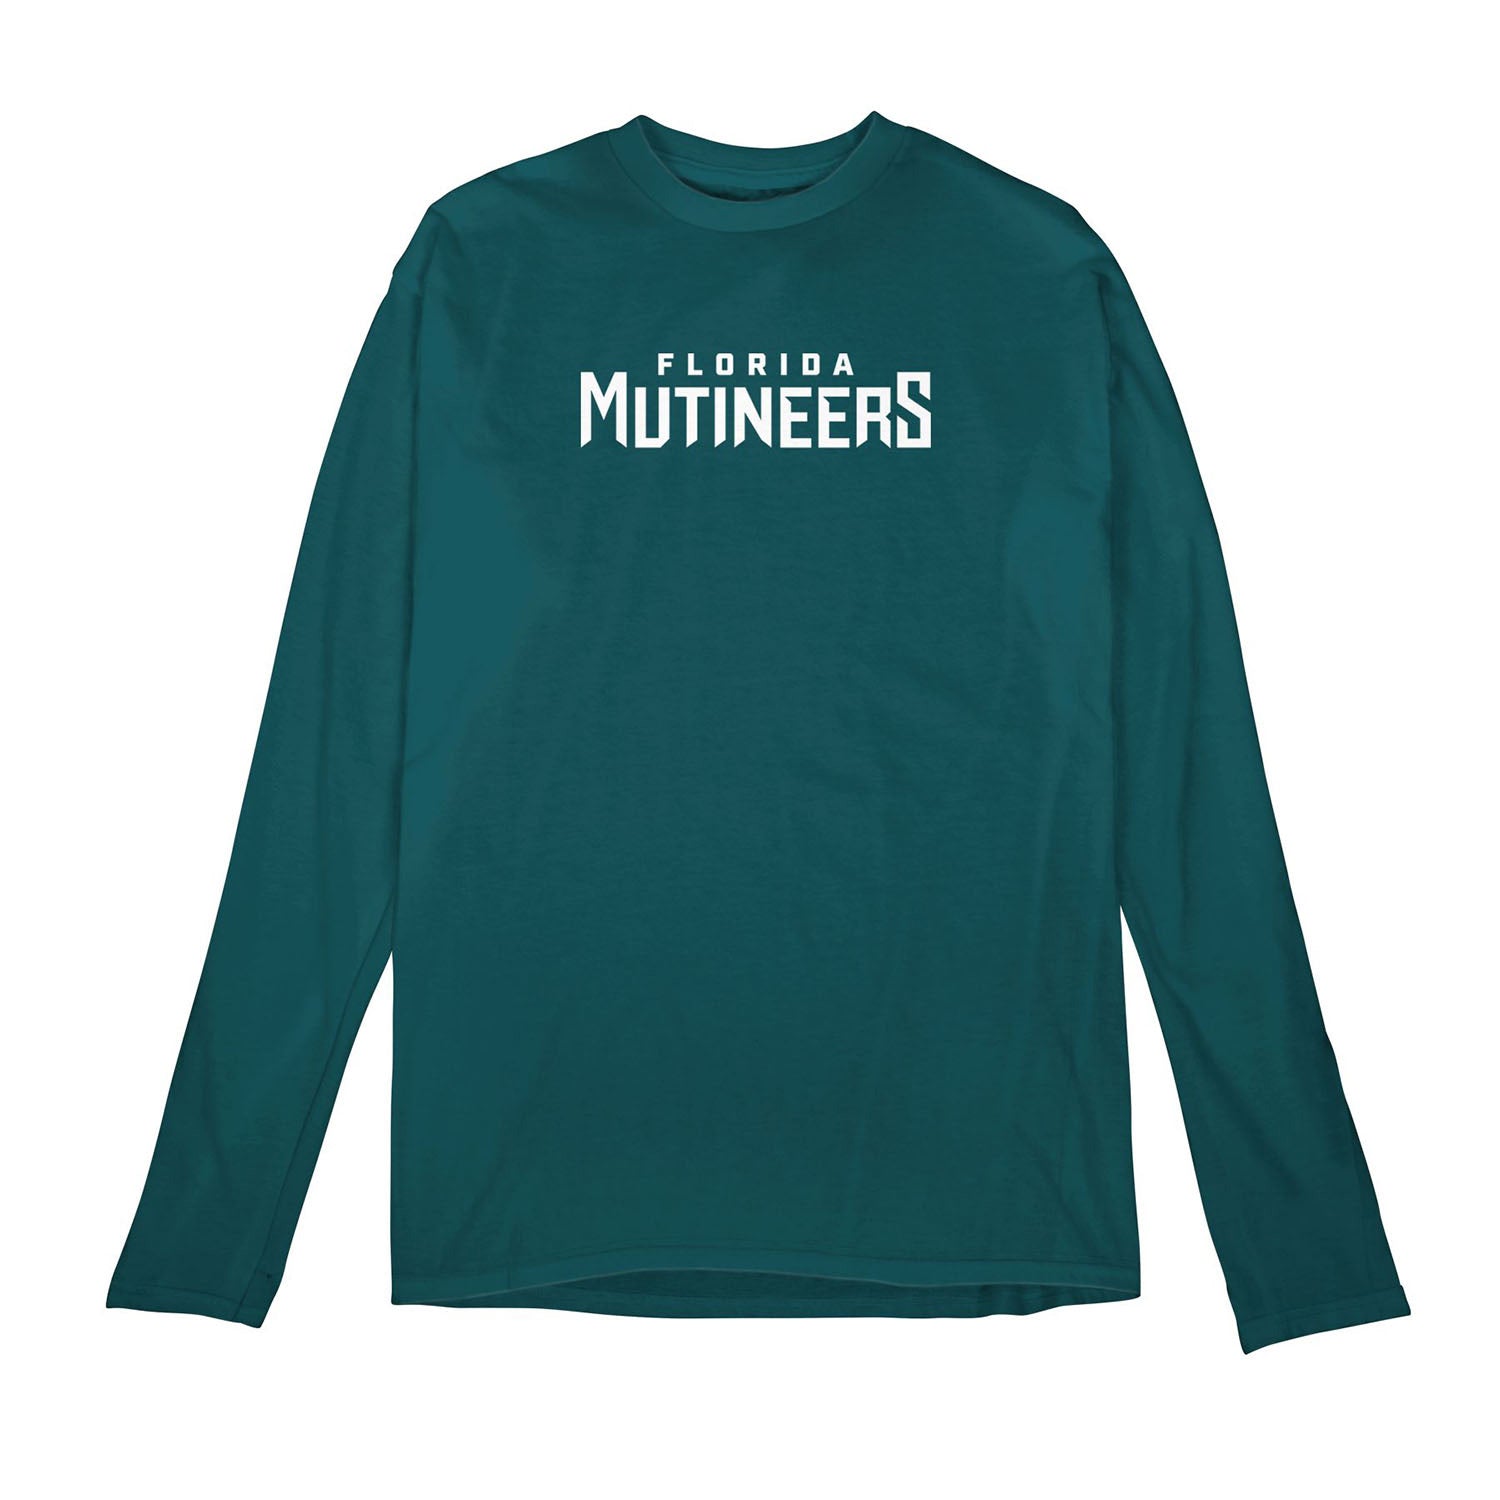 Florida Mutineers Signature Logo Teal Long Sleeve T-Shirt